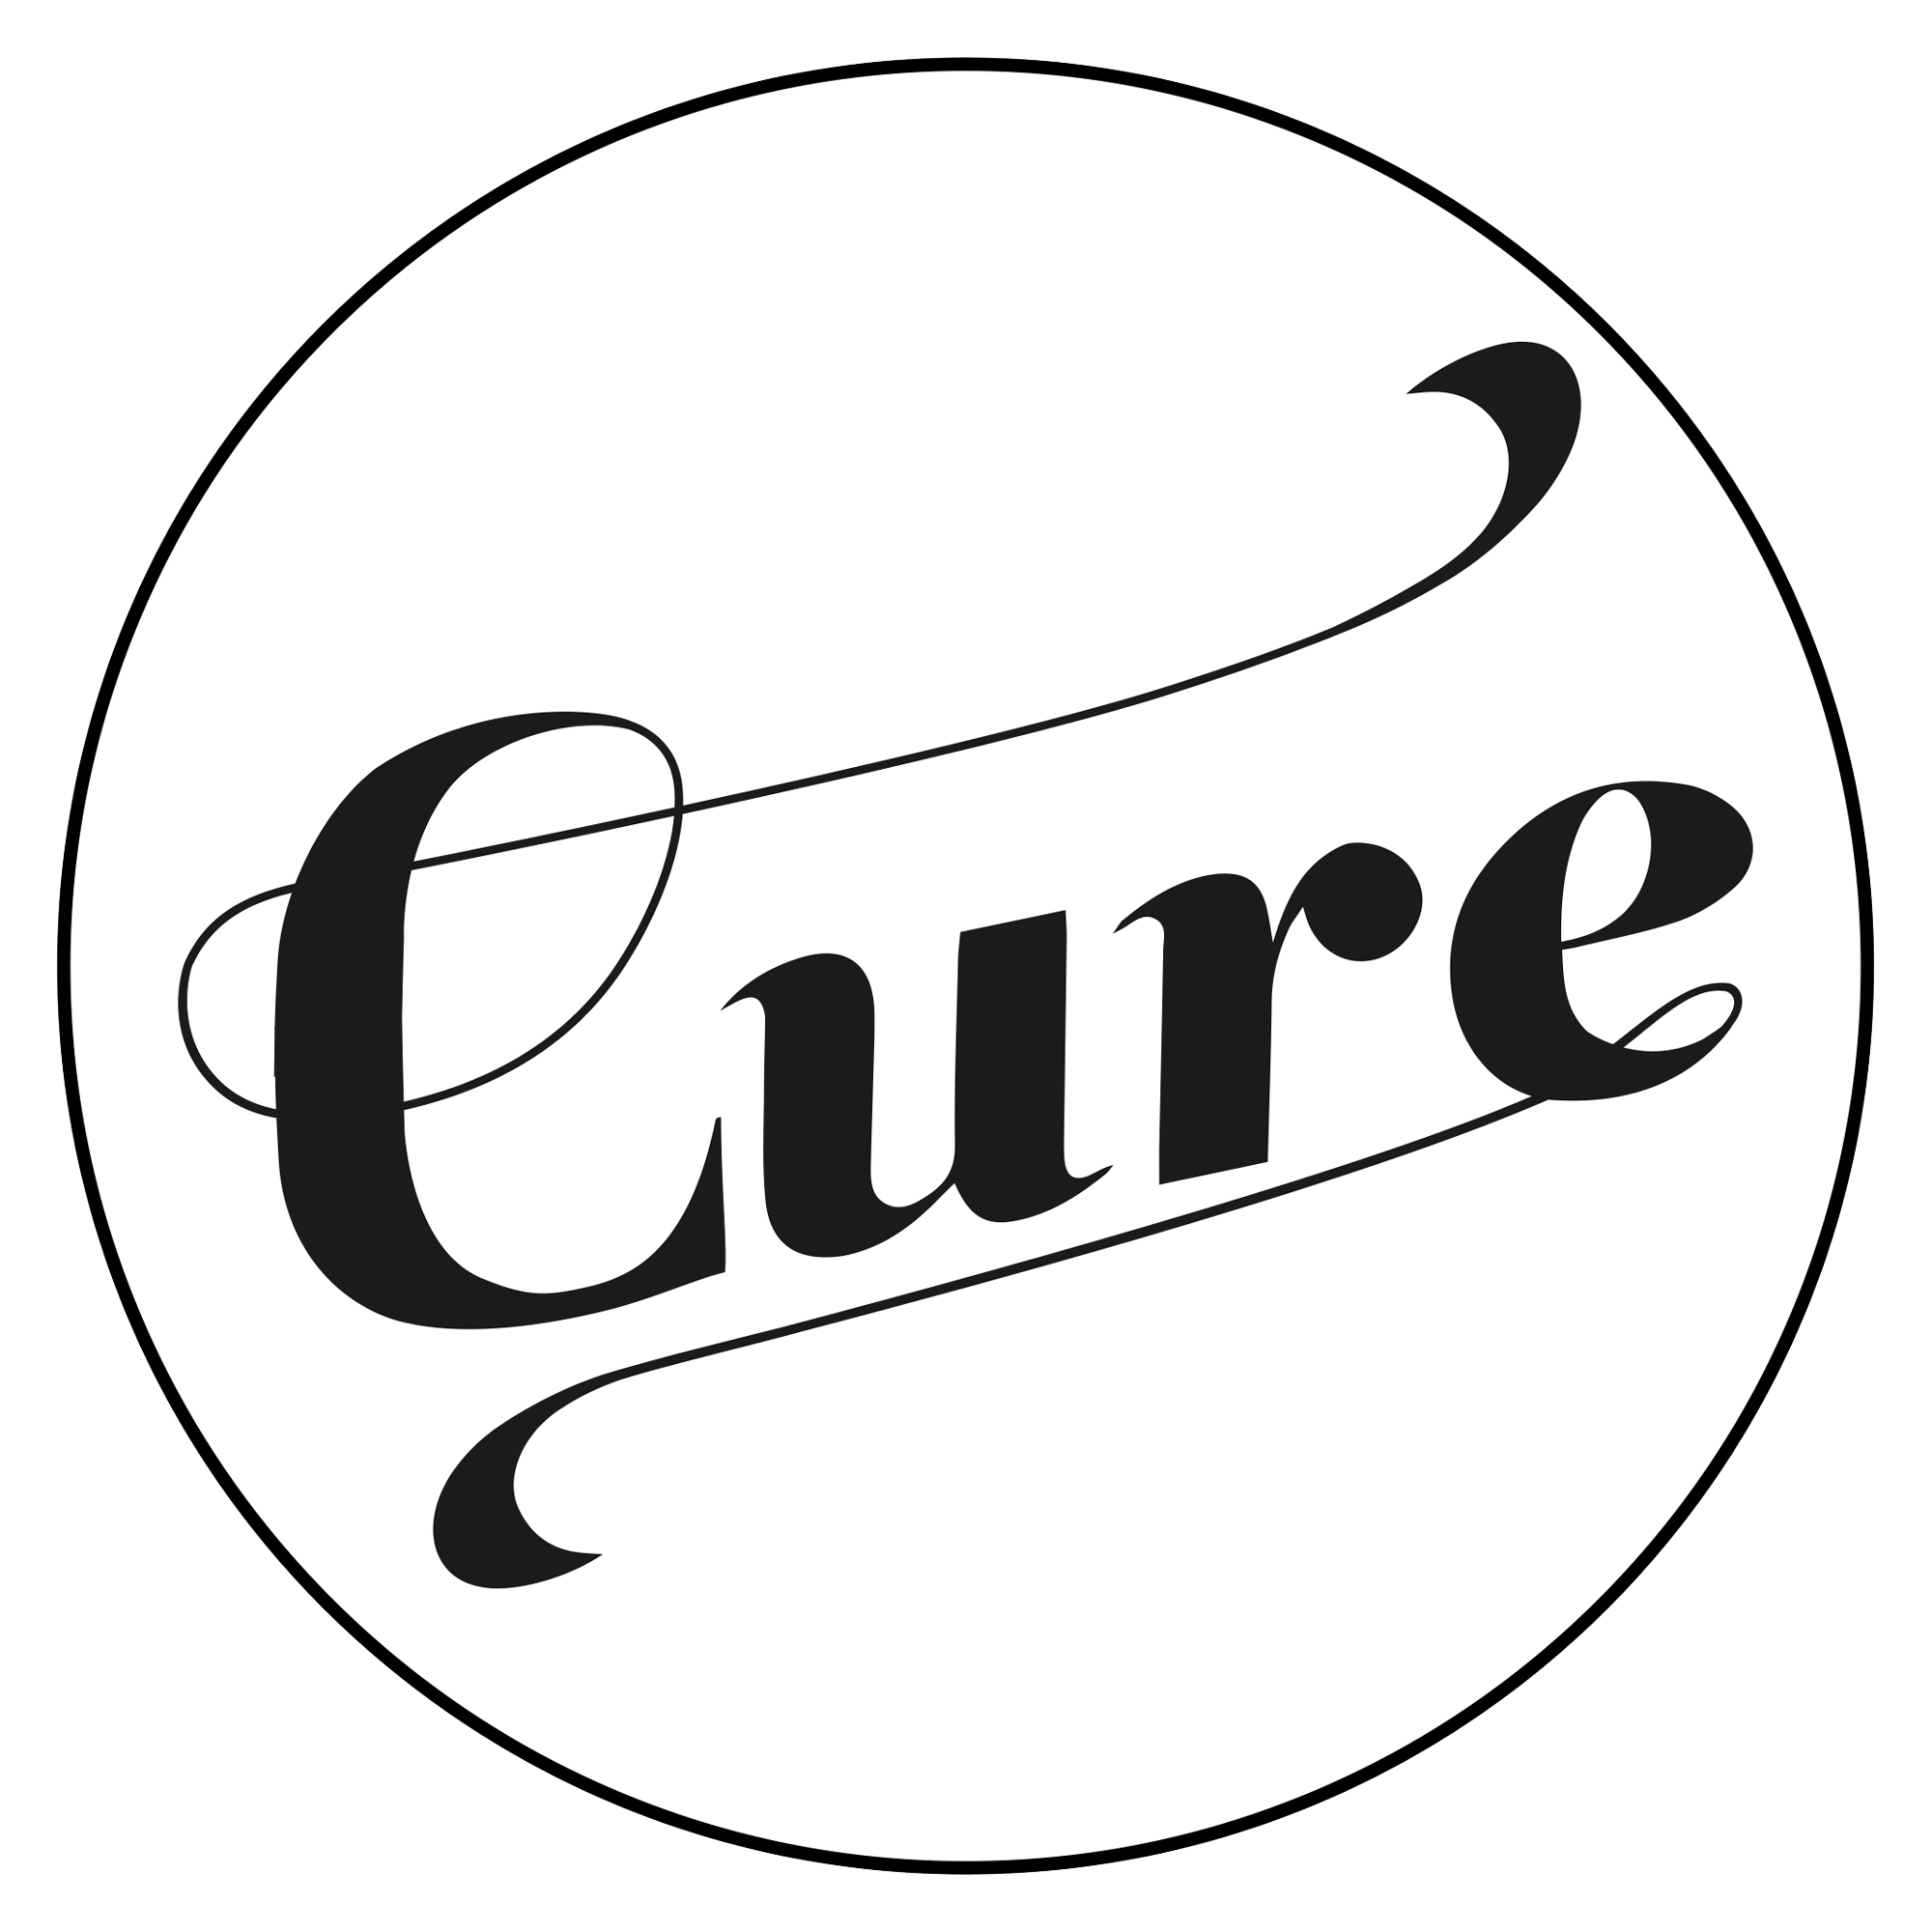 The Cure Logo  PNG Logo Vector Downloads SVG EPS